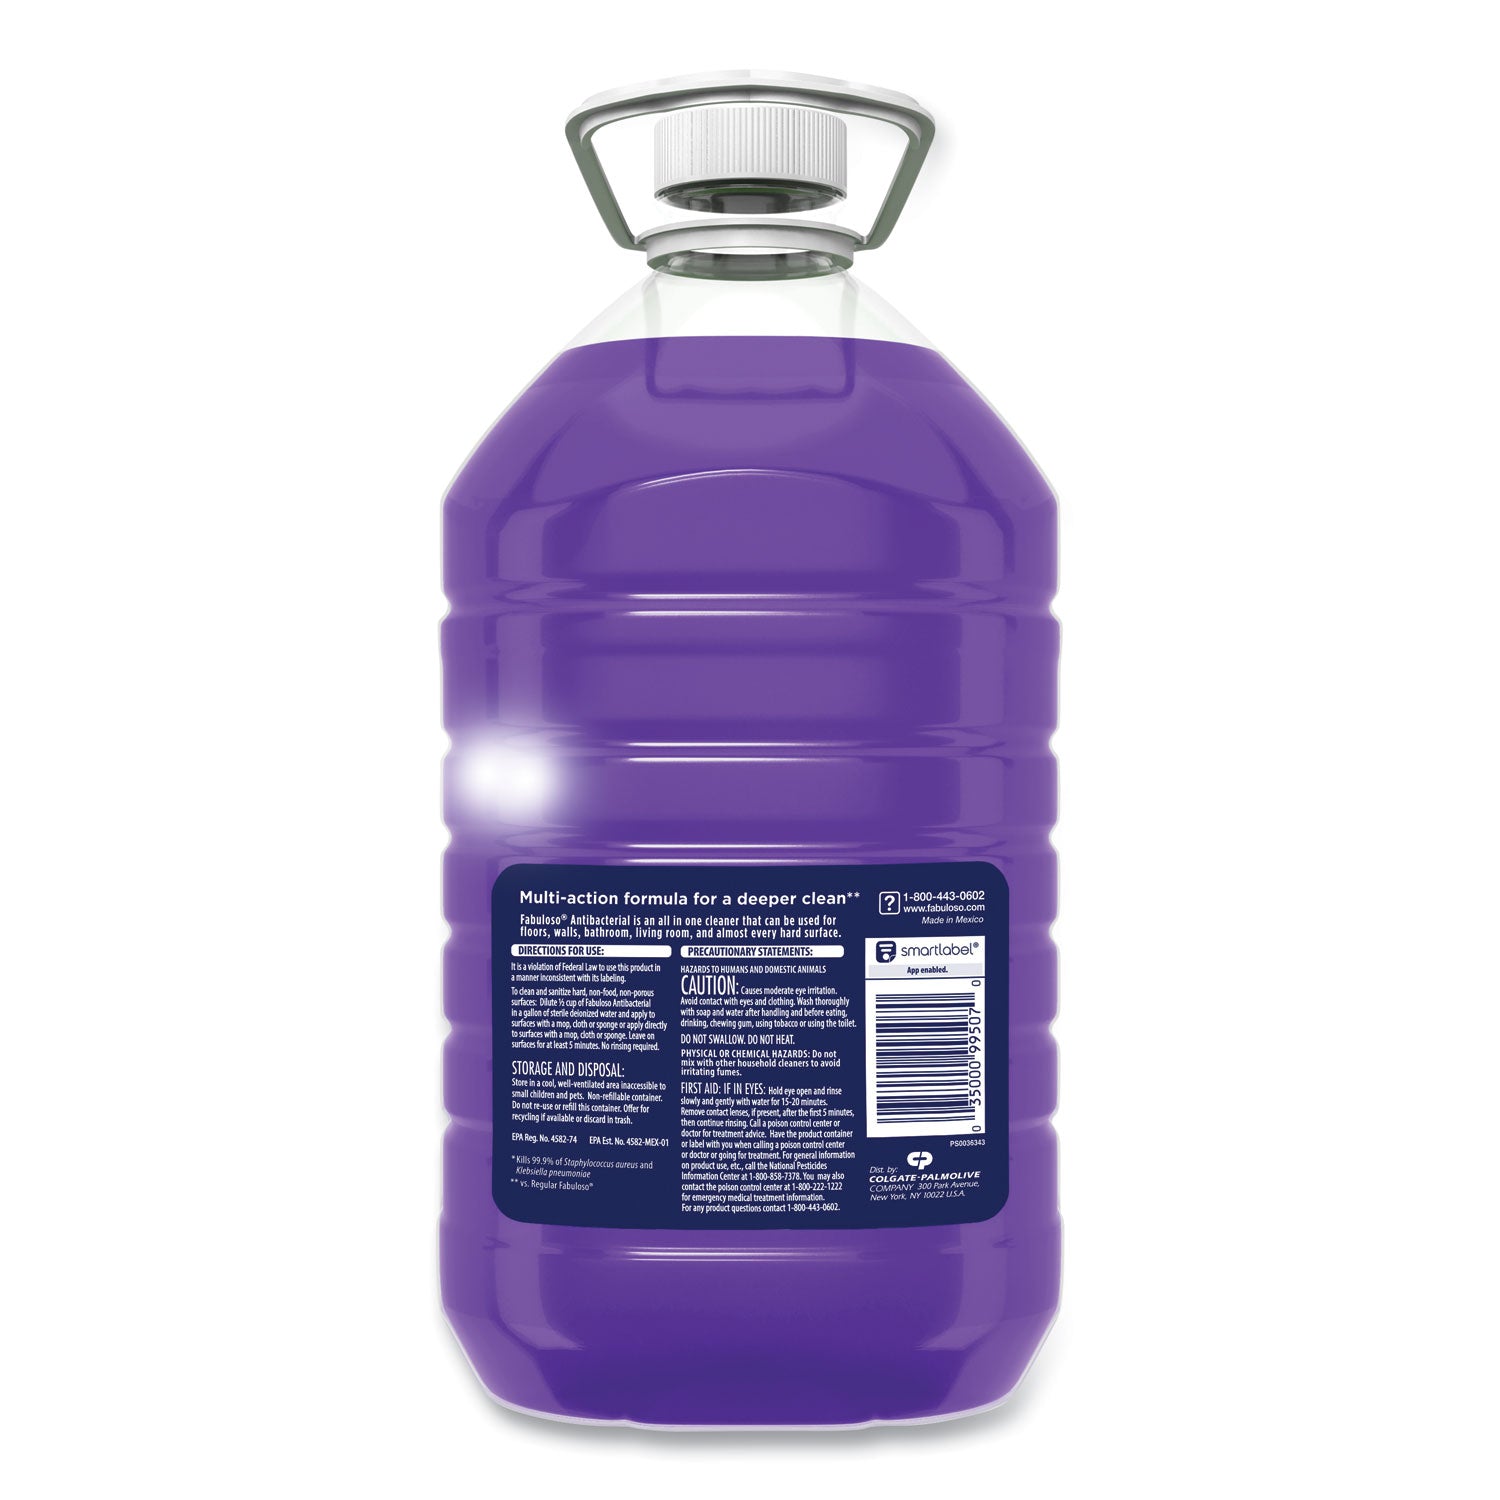 antibacterial-multi-purpose-cleaner-lavender-scent-169-oz-bottle-3-carton_cpc99507 - 2